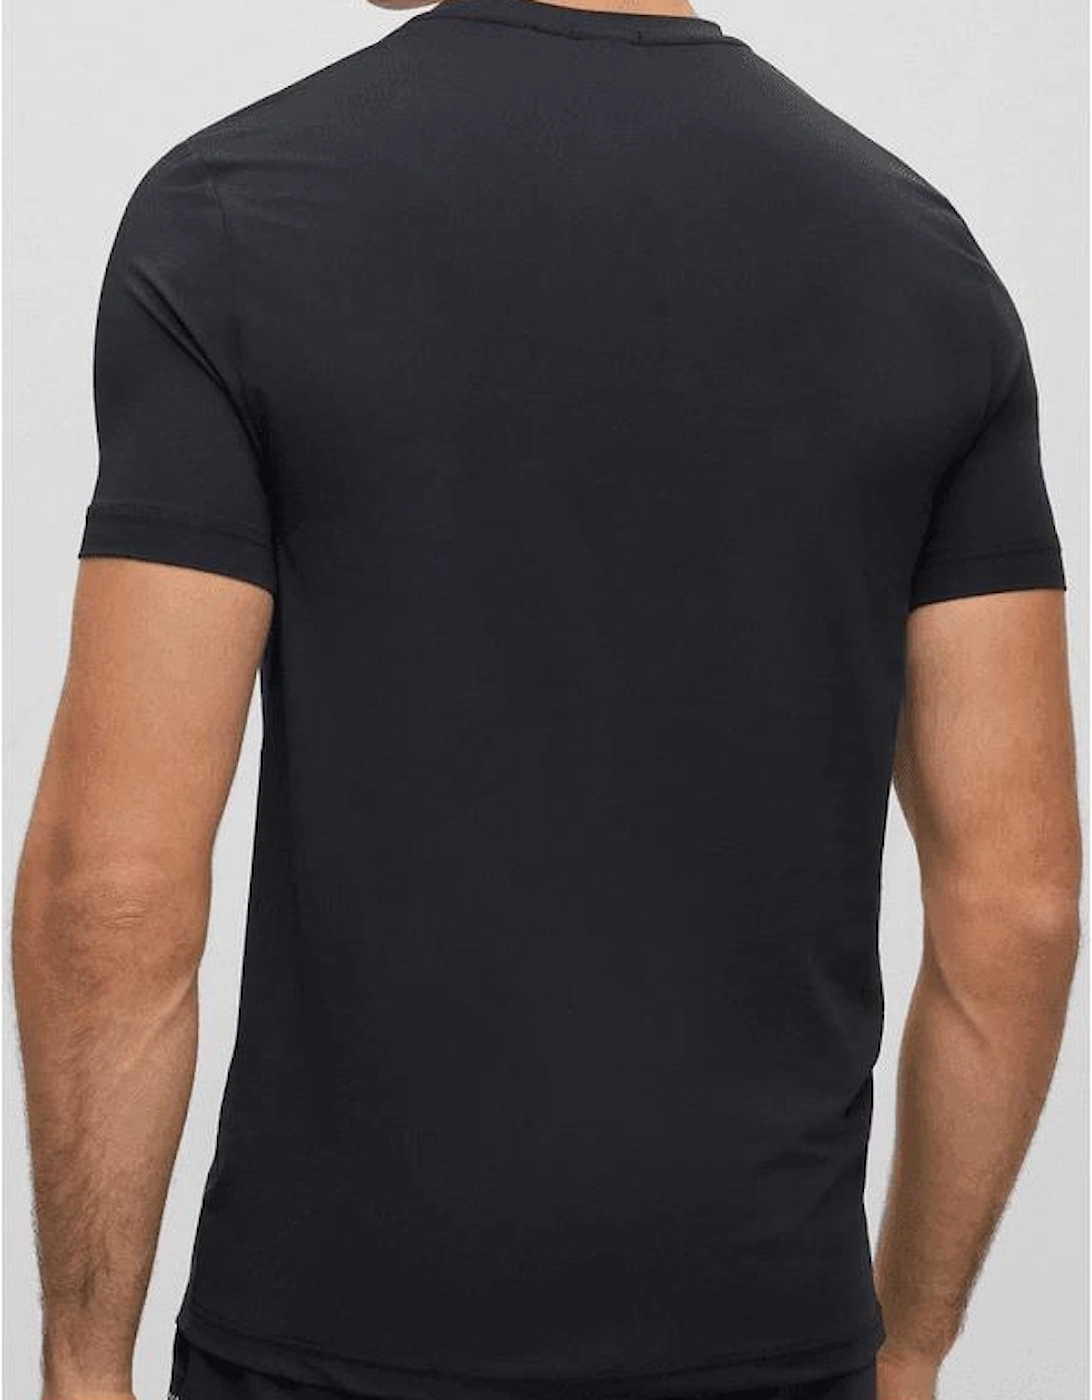 Tee Active Reflective Logo Slim Fit Black T-Shirt